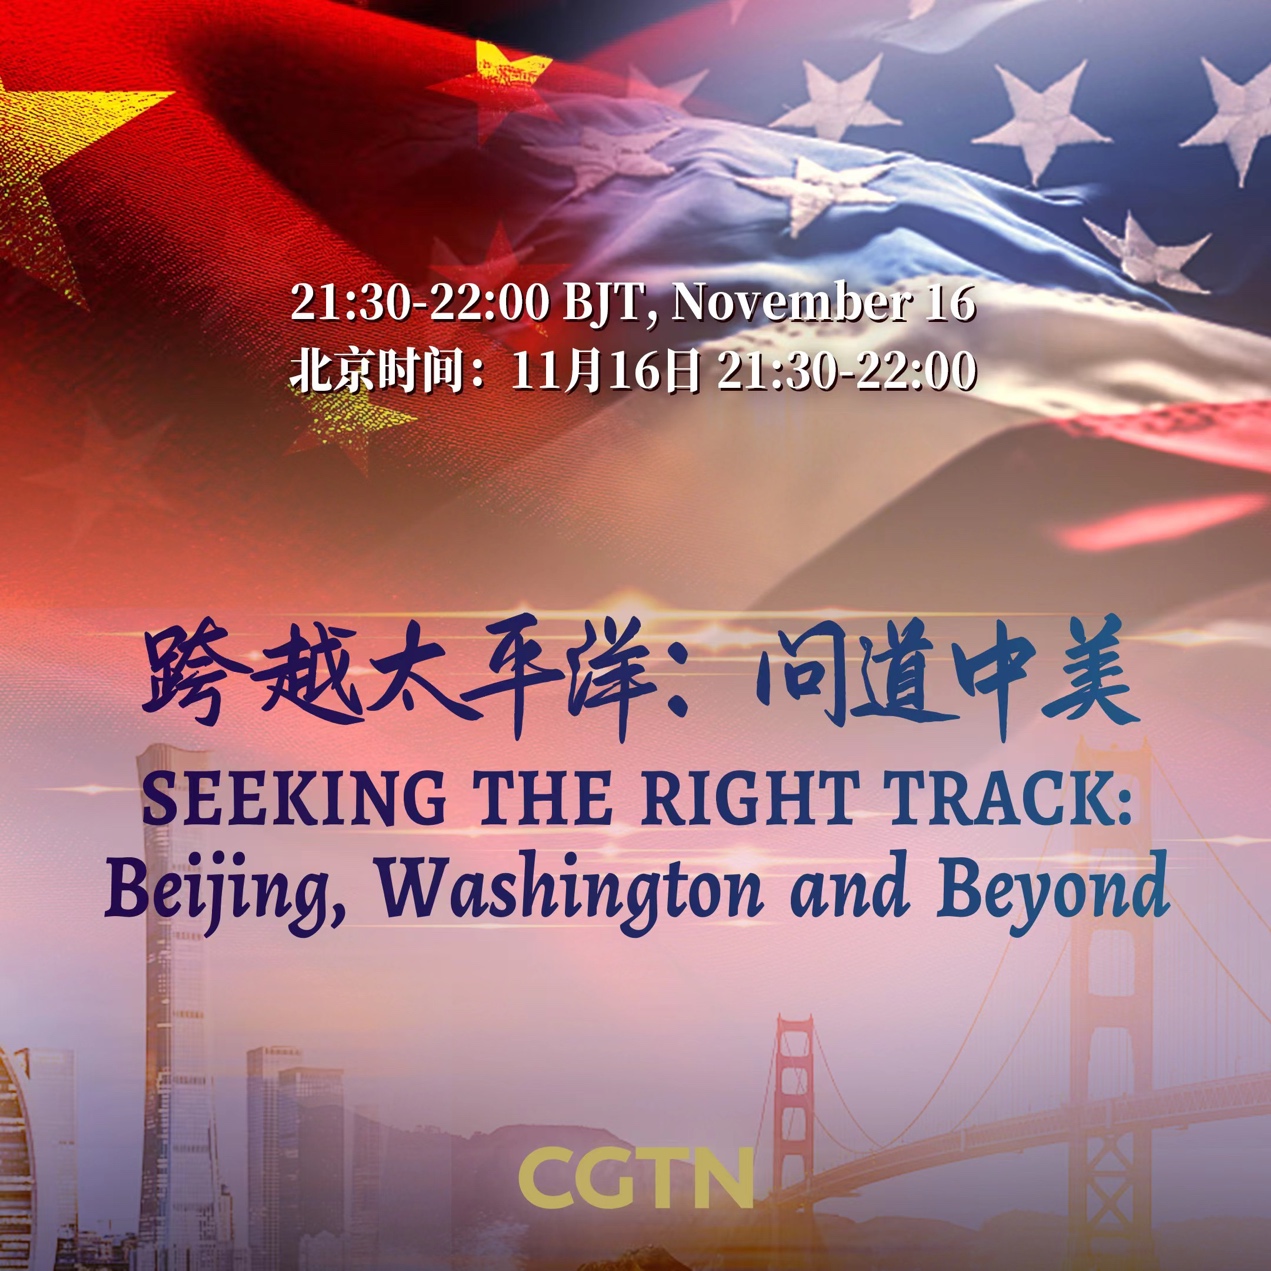 Seeking the right track: Beijing, Washington and beyond